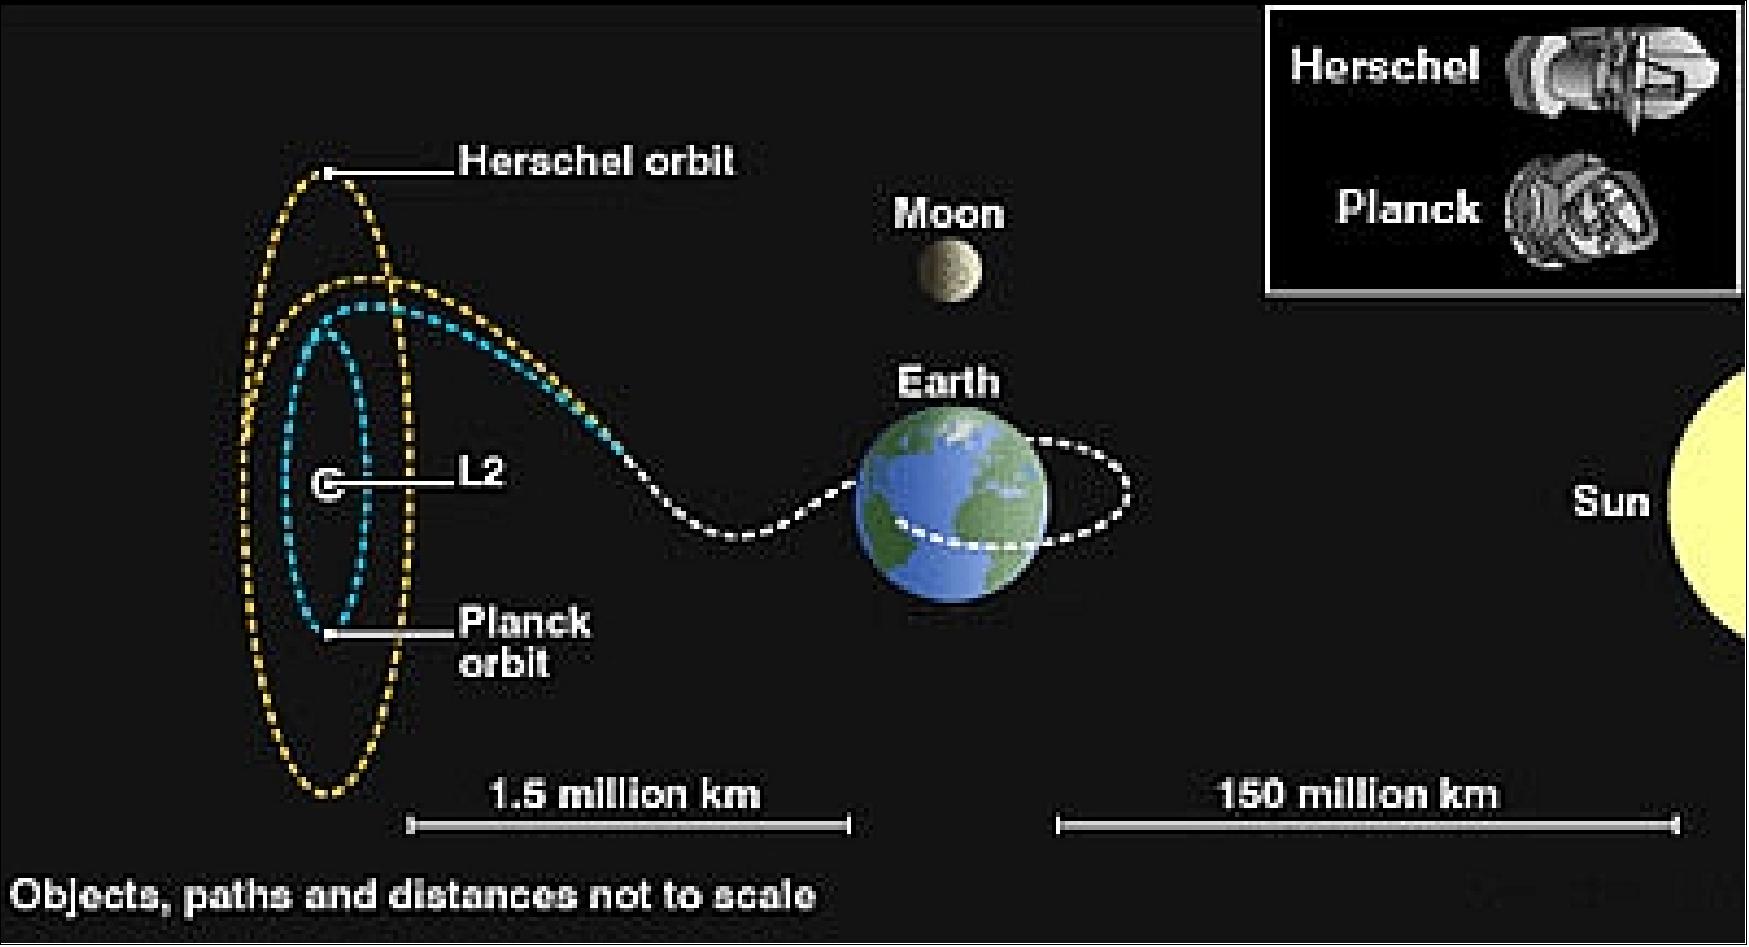 Figure 12: Schematic view of Herschel and Planck orbits around L2 (image credit: ESA) 21)